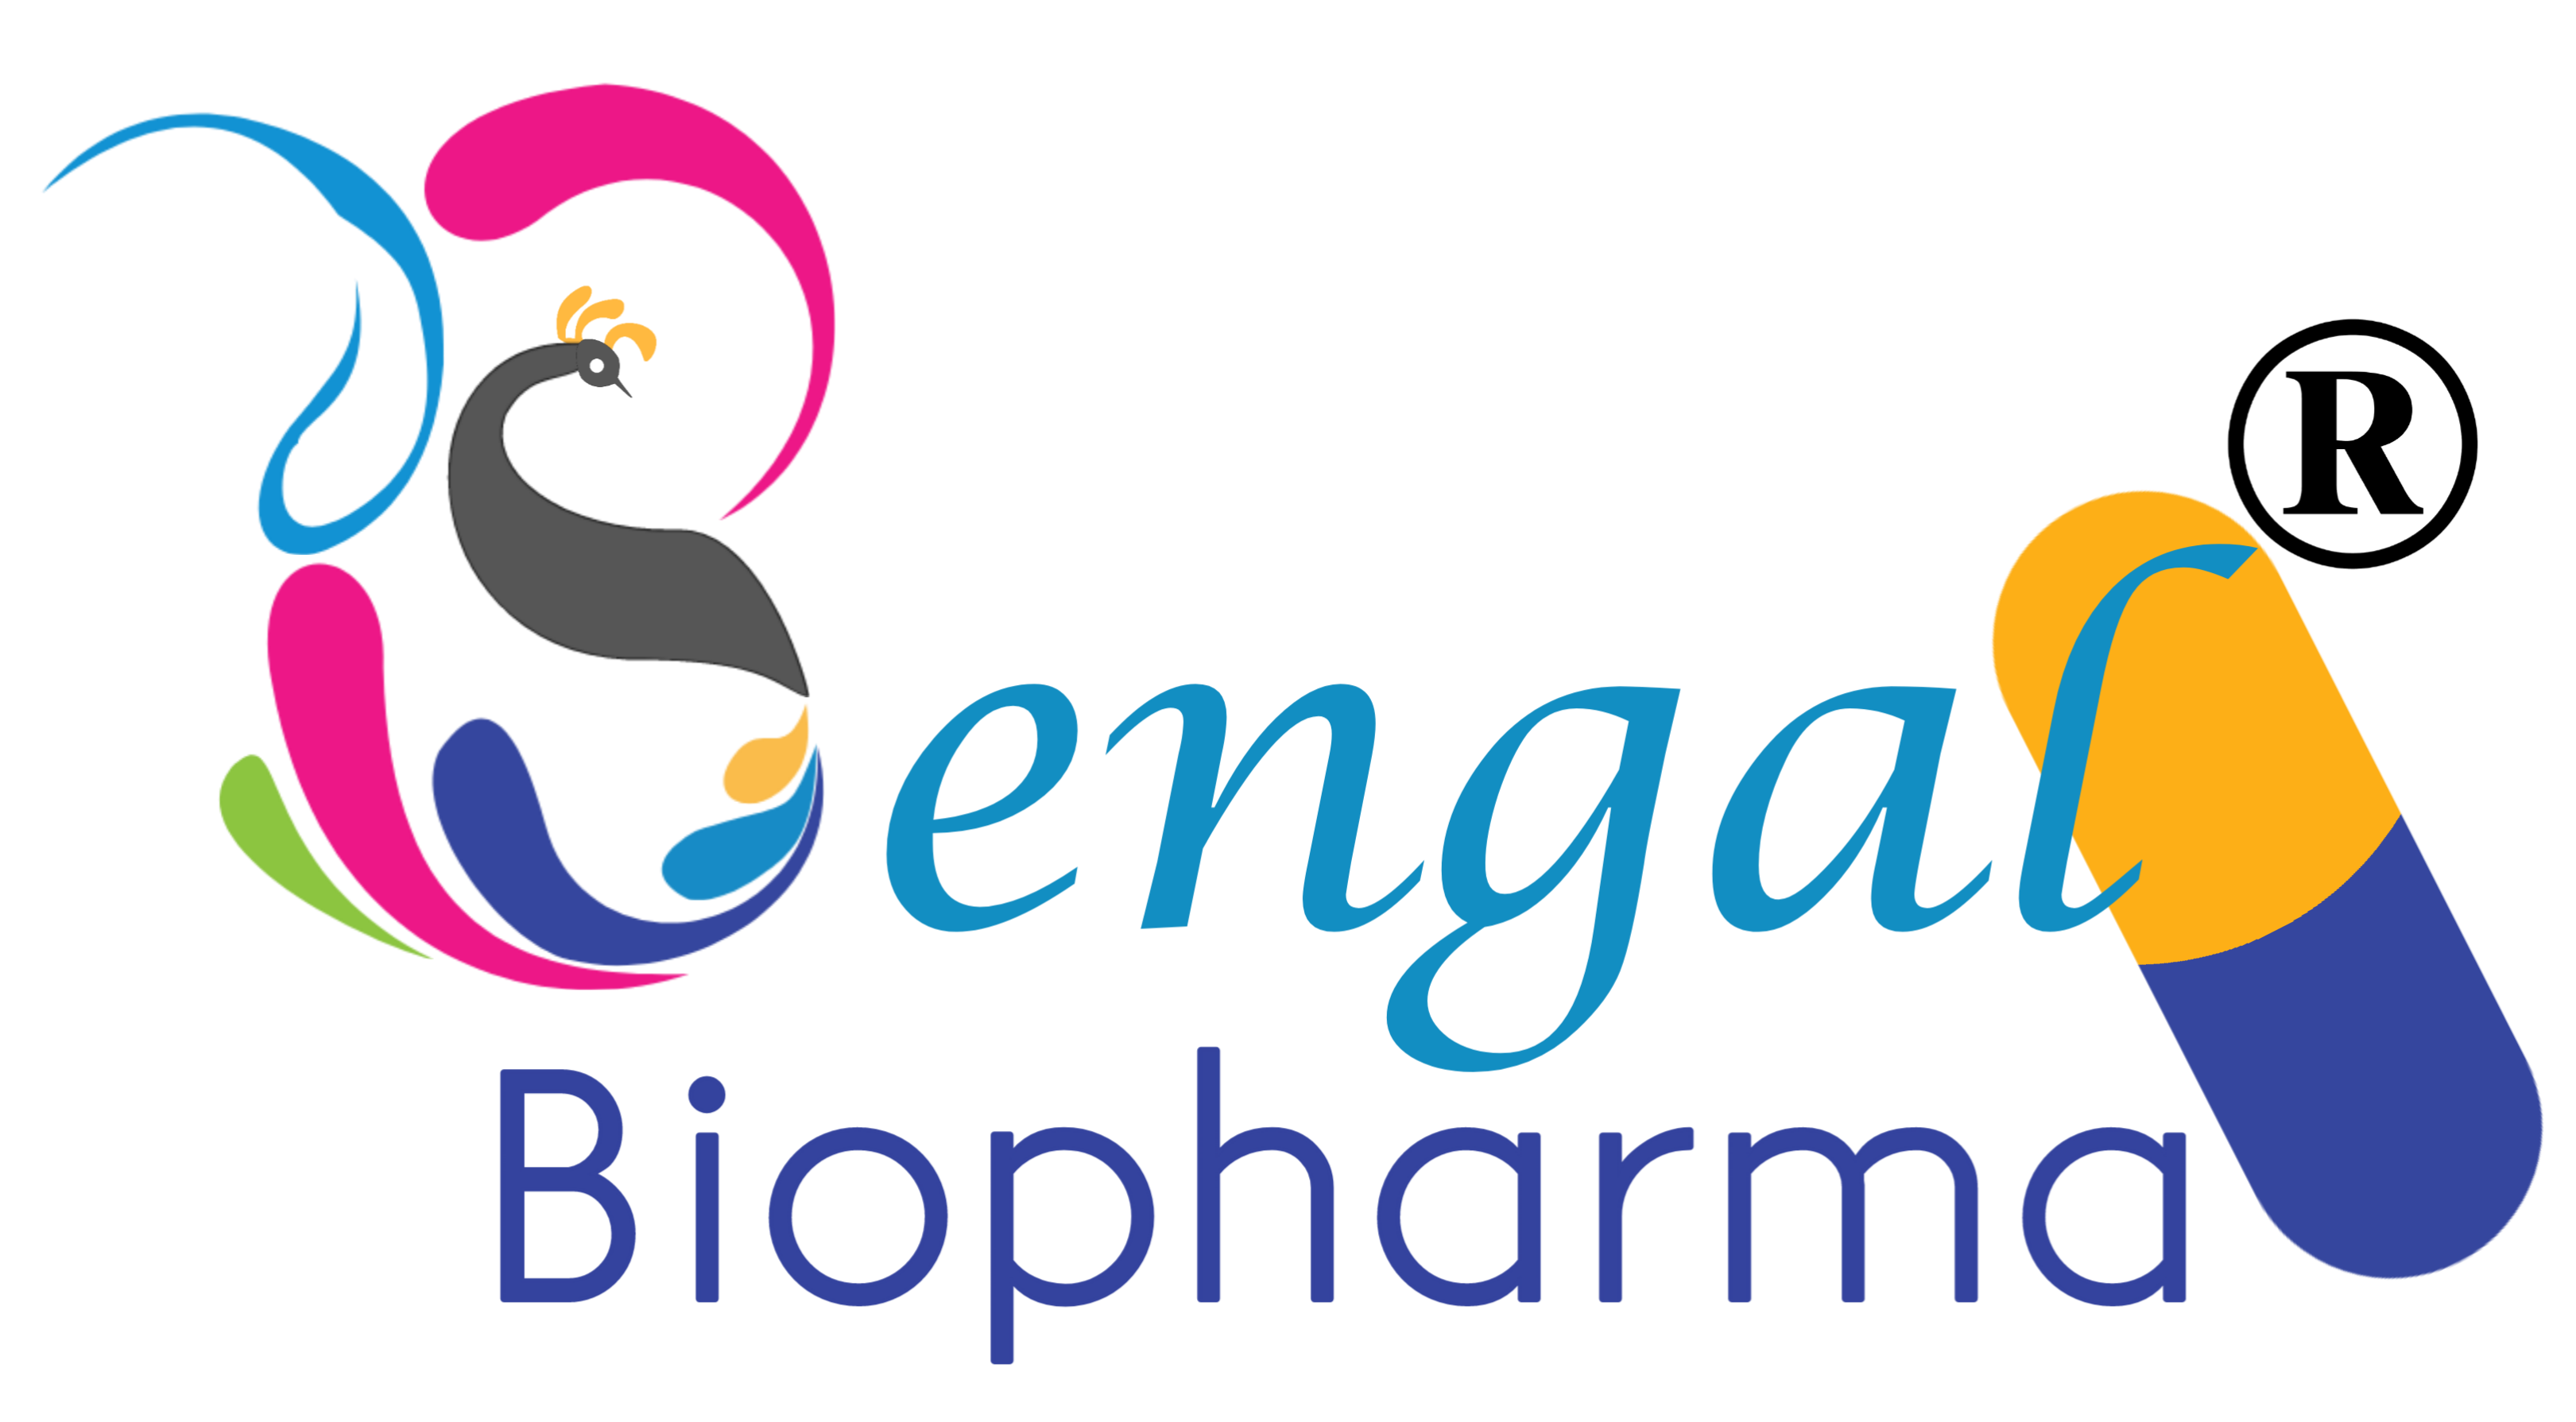 Bengal BioPharma